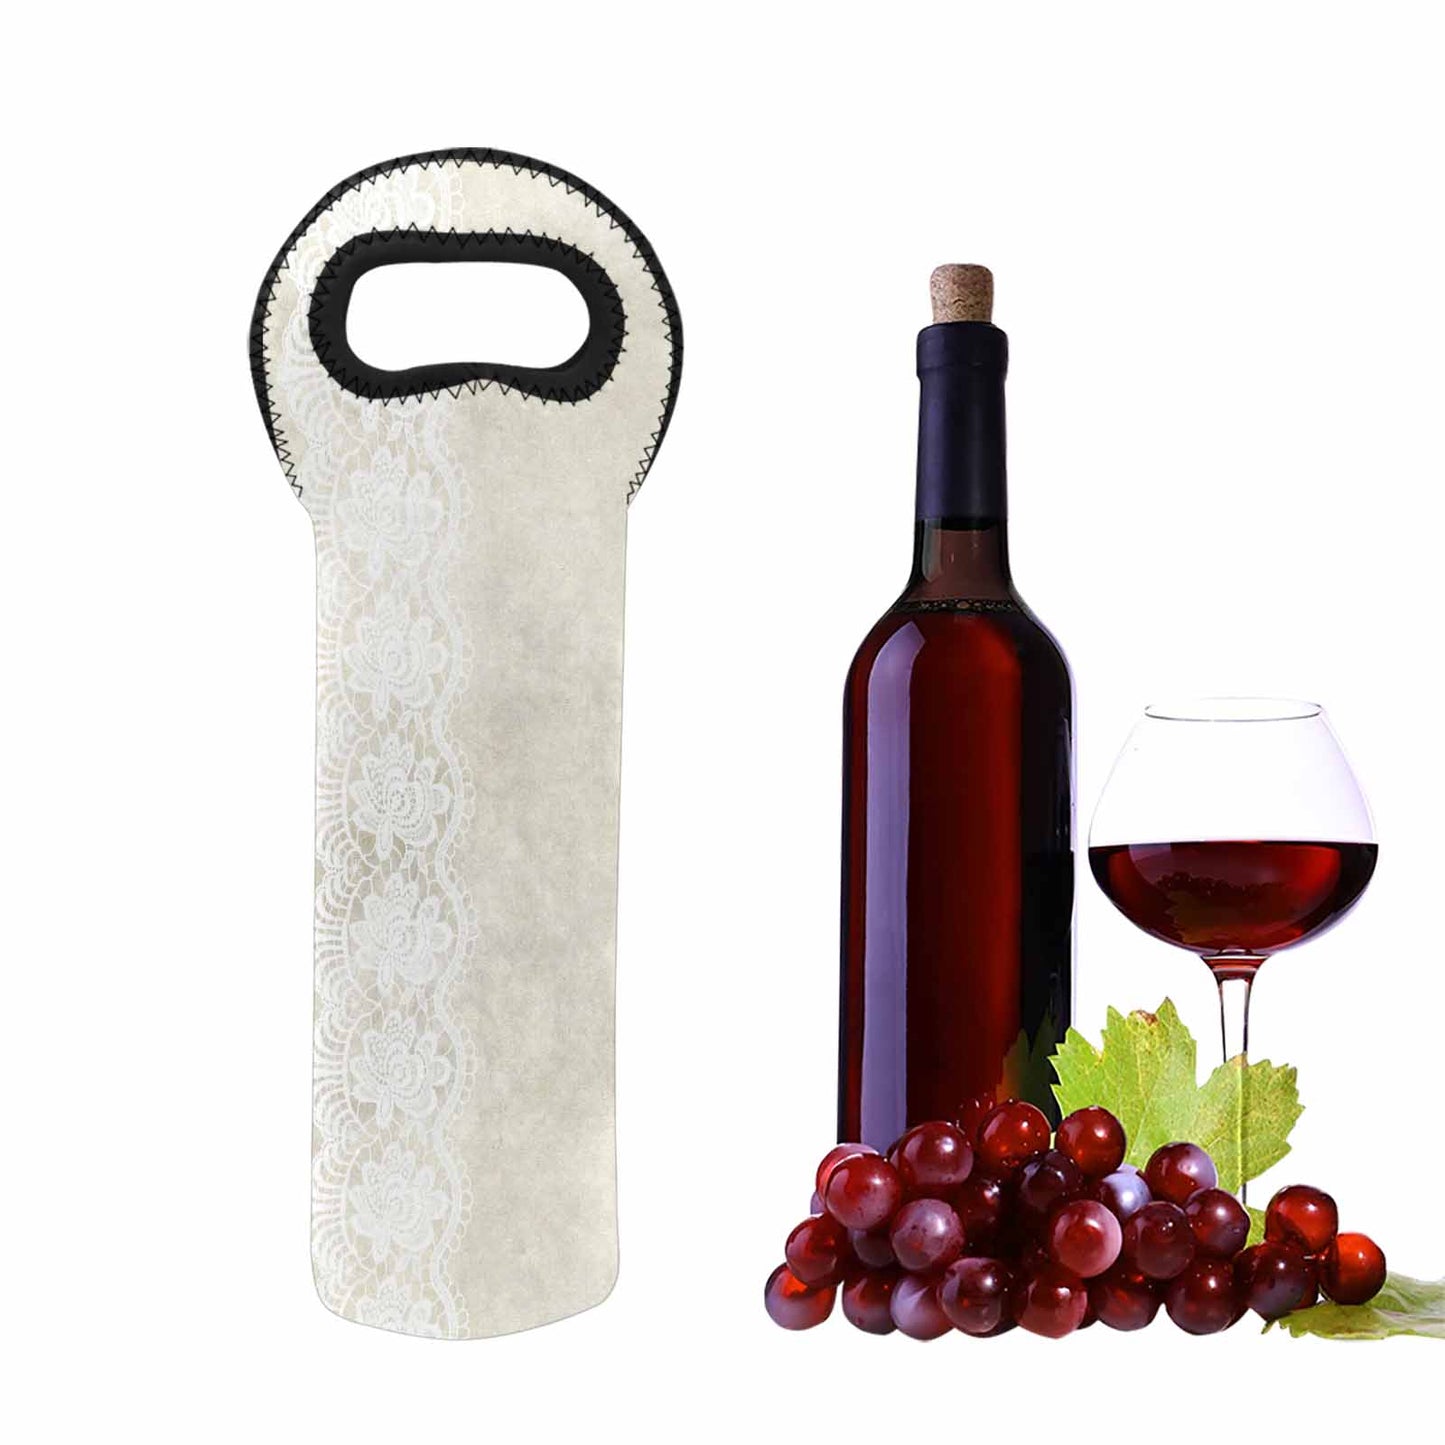 Victorian Lace 1 bottle wine bag, design 27